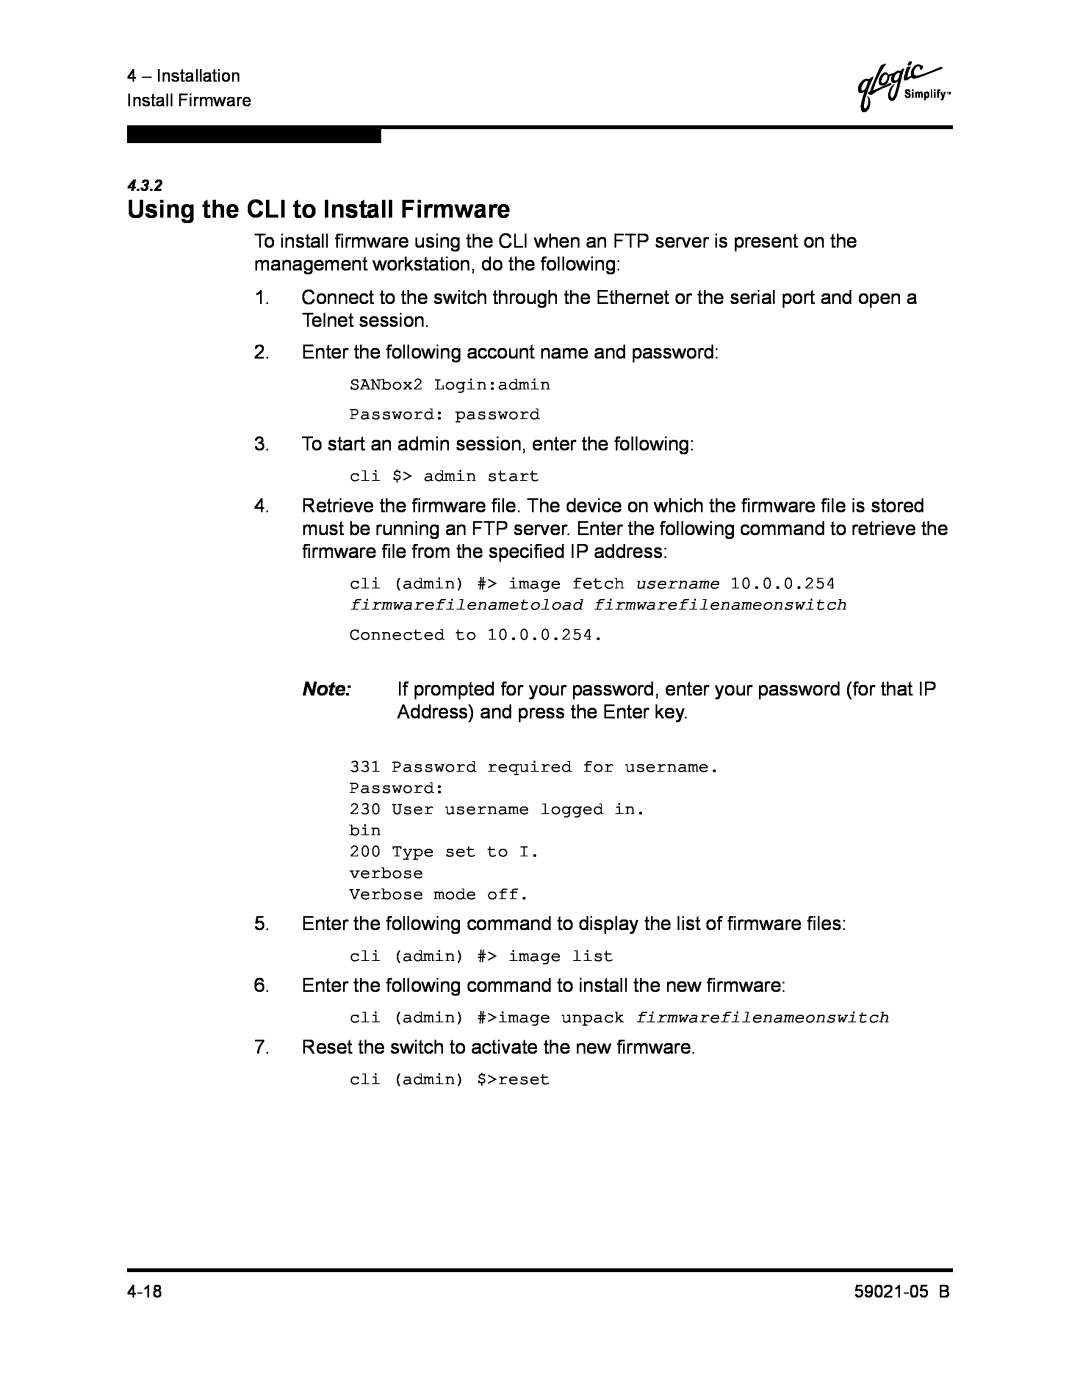 Q-Logic 59021-05 B manual Using the CLI to Install Firmware 